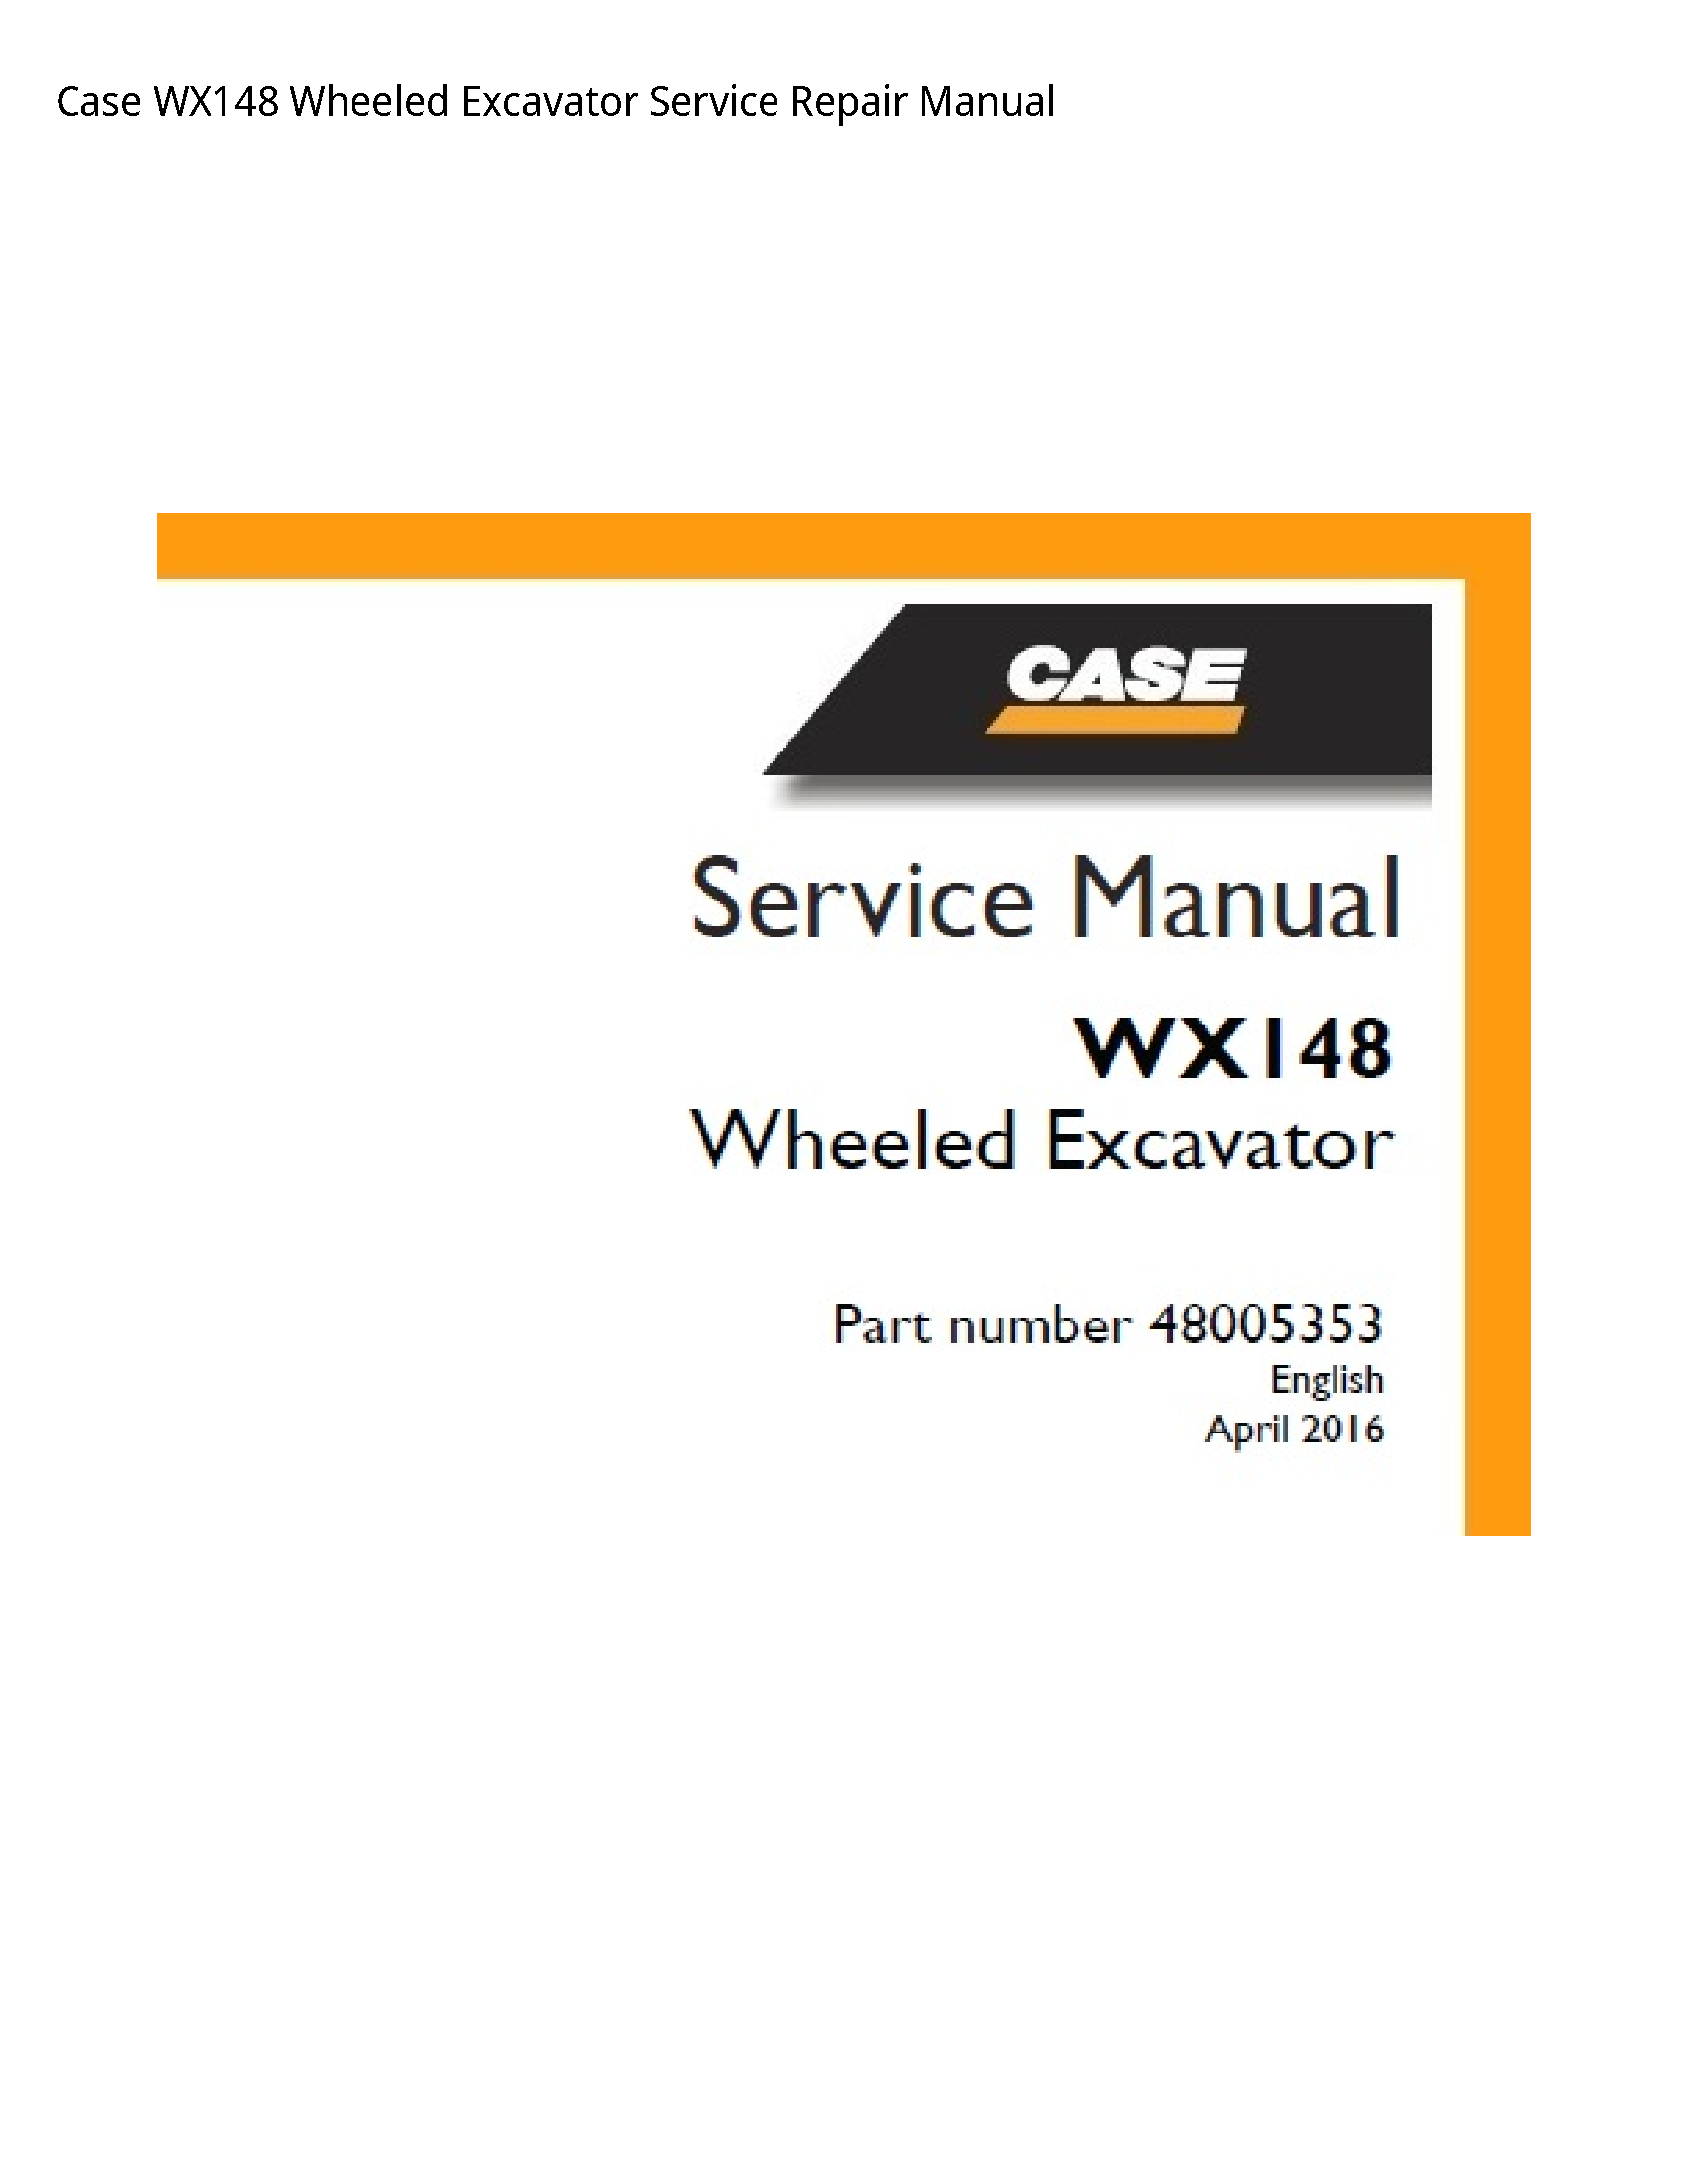 Case/Case IH WX148 Wheeled Excavator manual